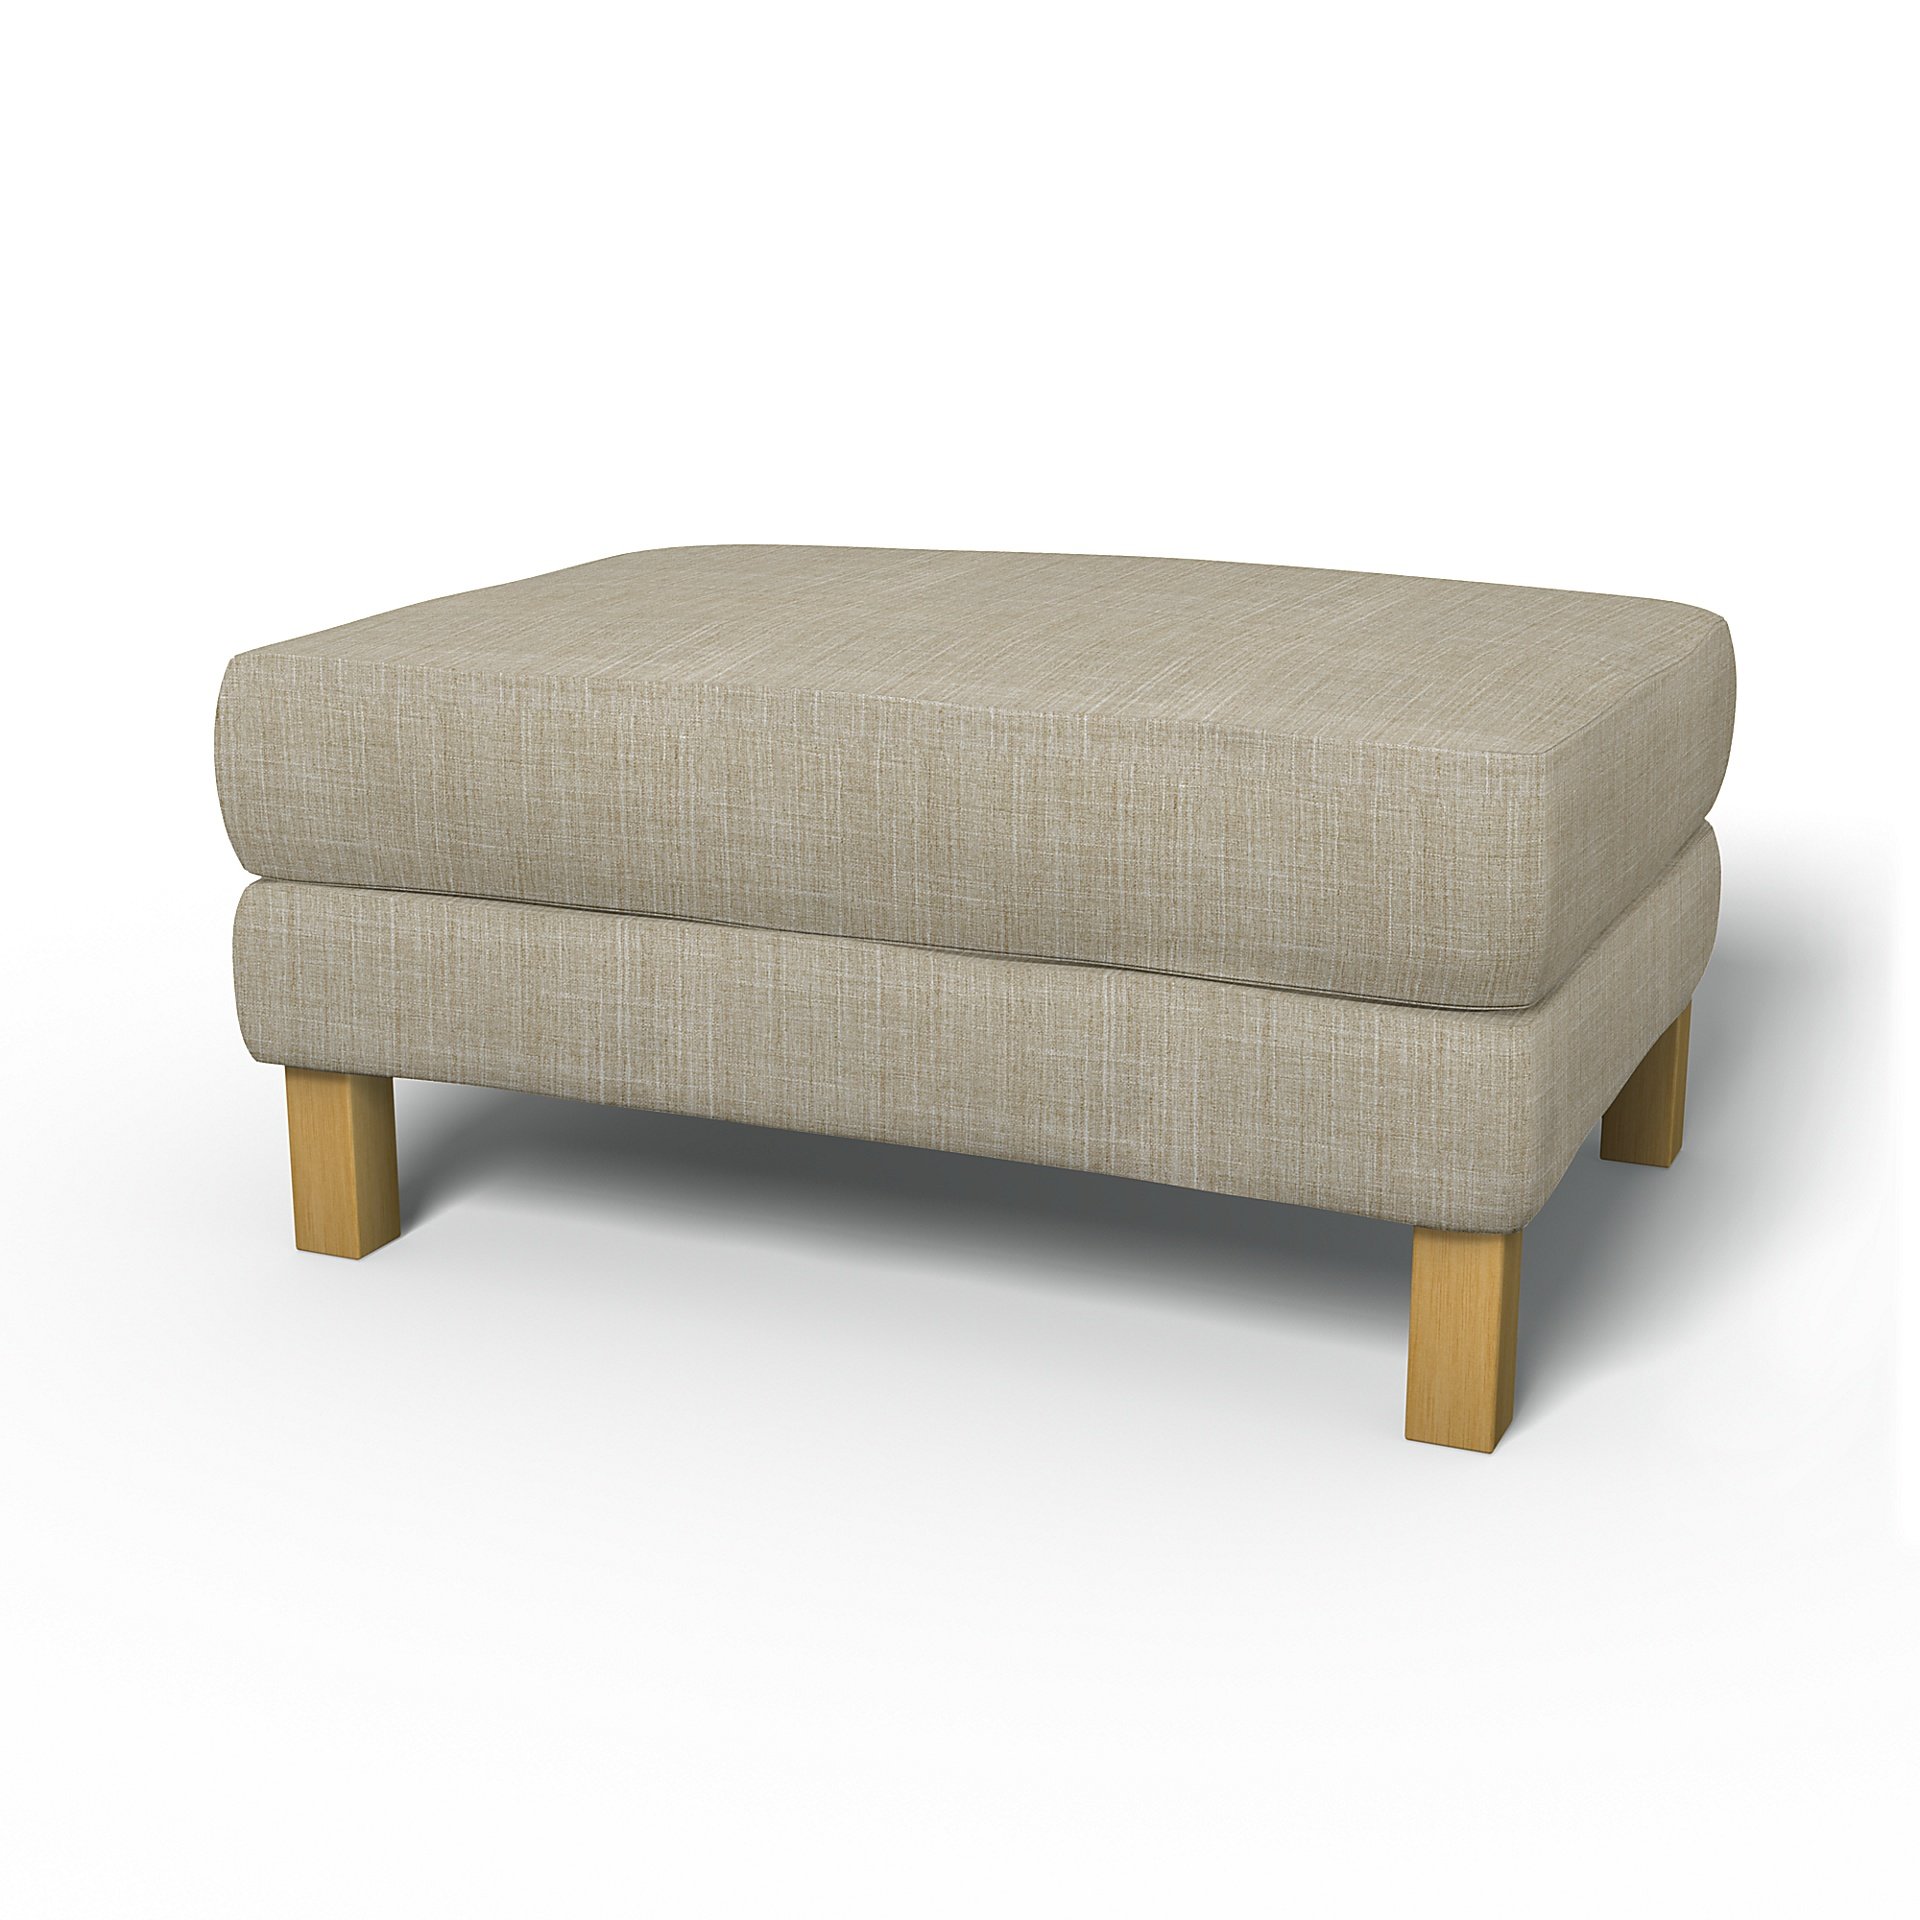 IKEA - Karlstad Footstool Cover, Sand Beige, Boucle & Texture - Bemz